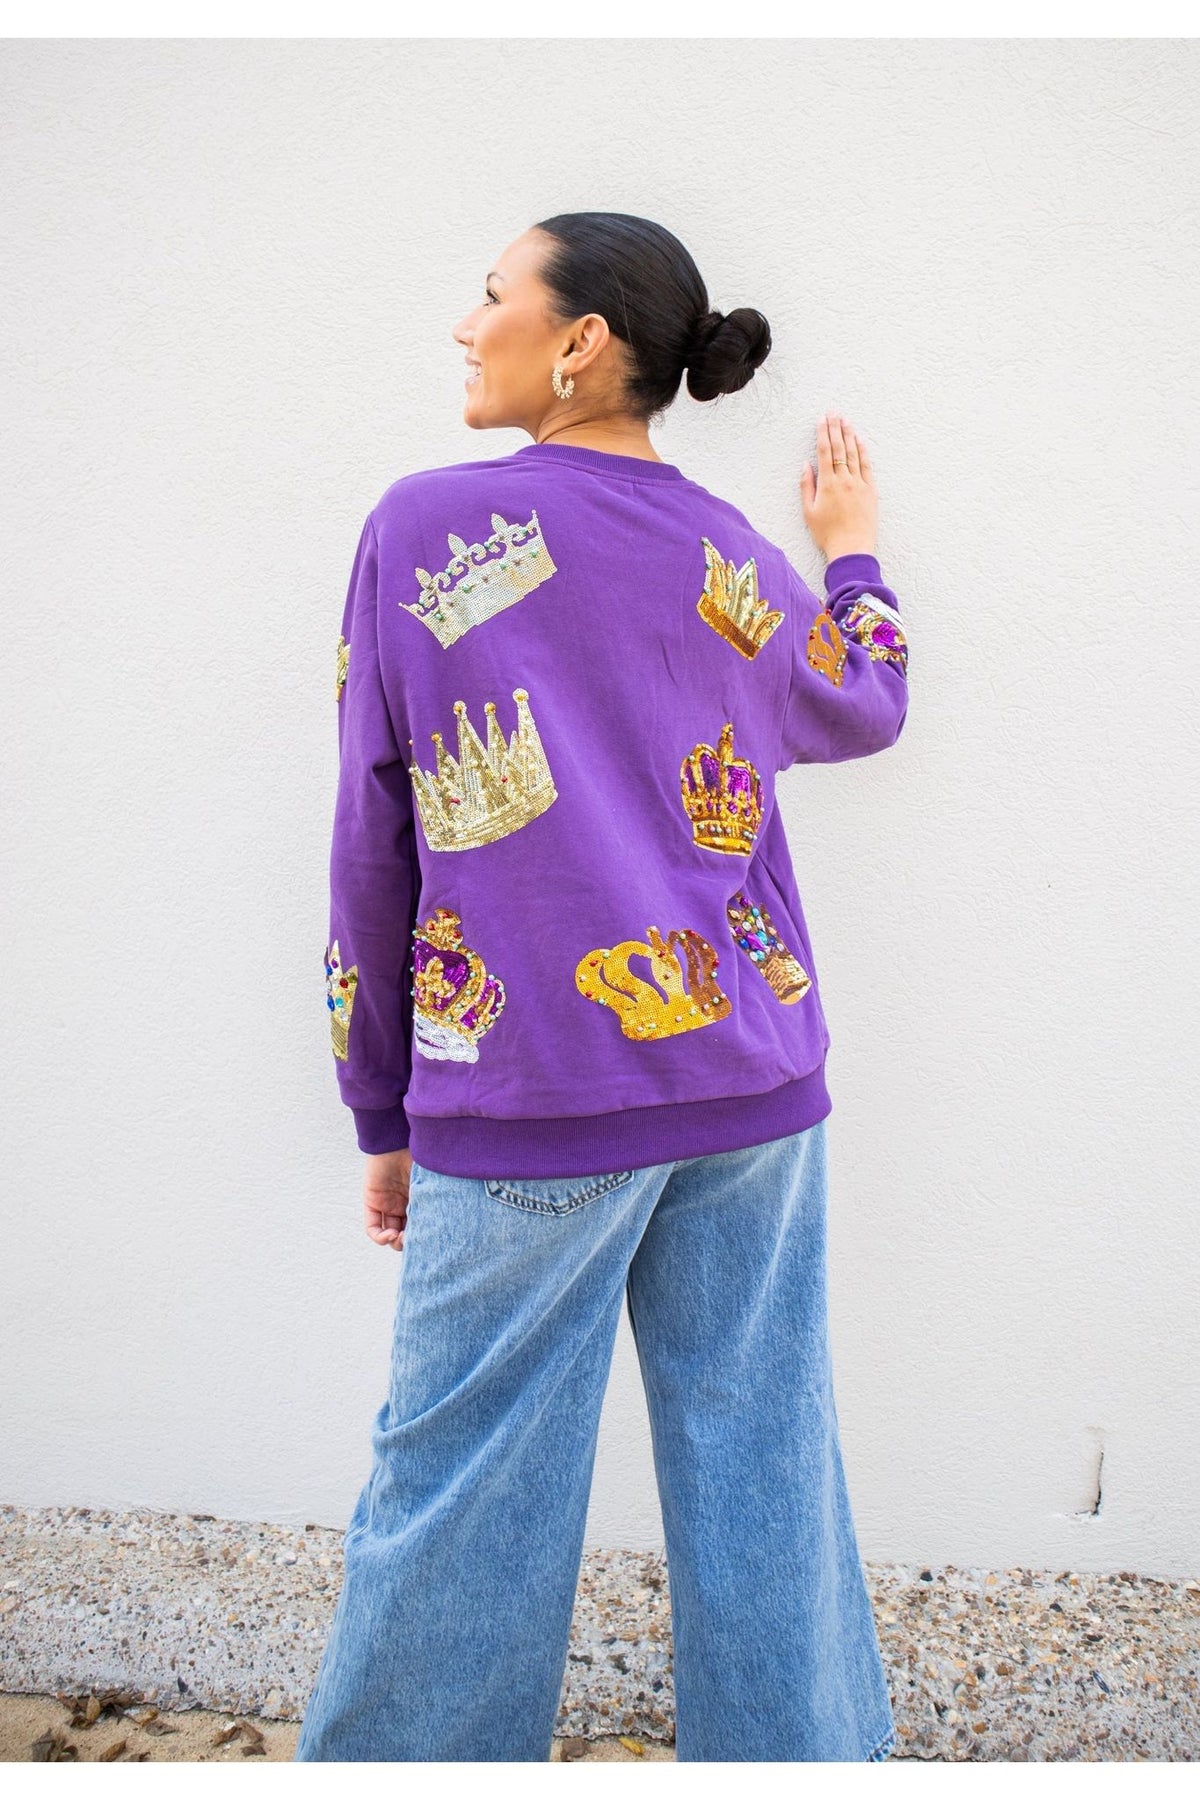 Queen Of Sparkles Purple Crown Sweatshirt-Tops-KCoutureBoutique, women's boutique in Bossier City, Louisiana